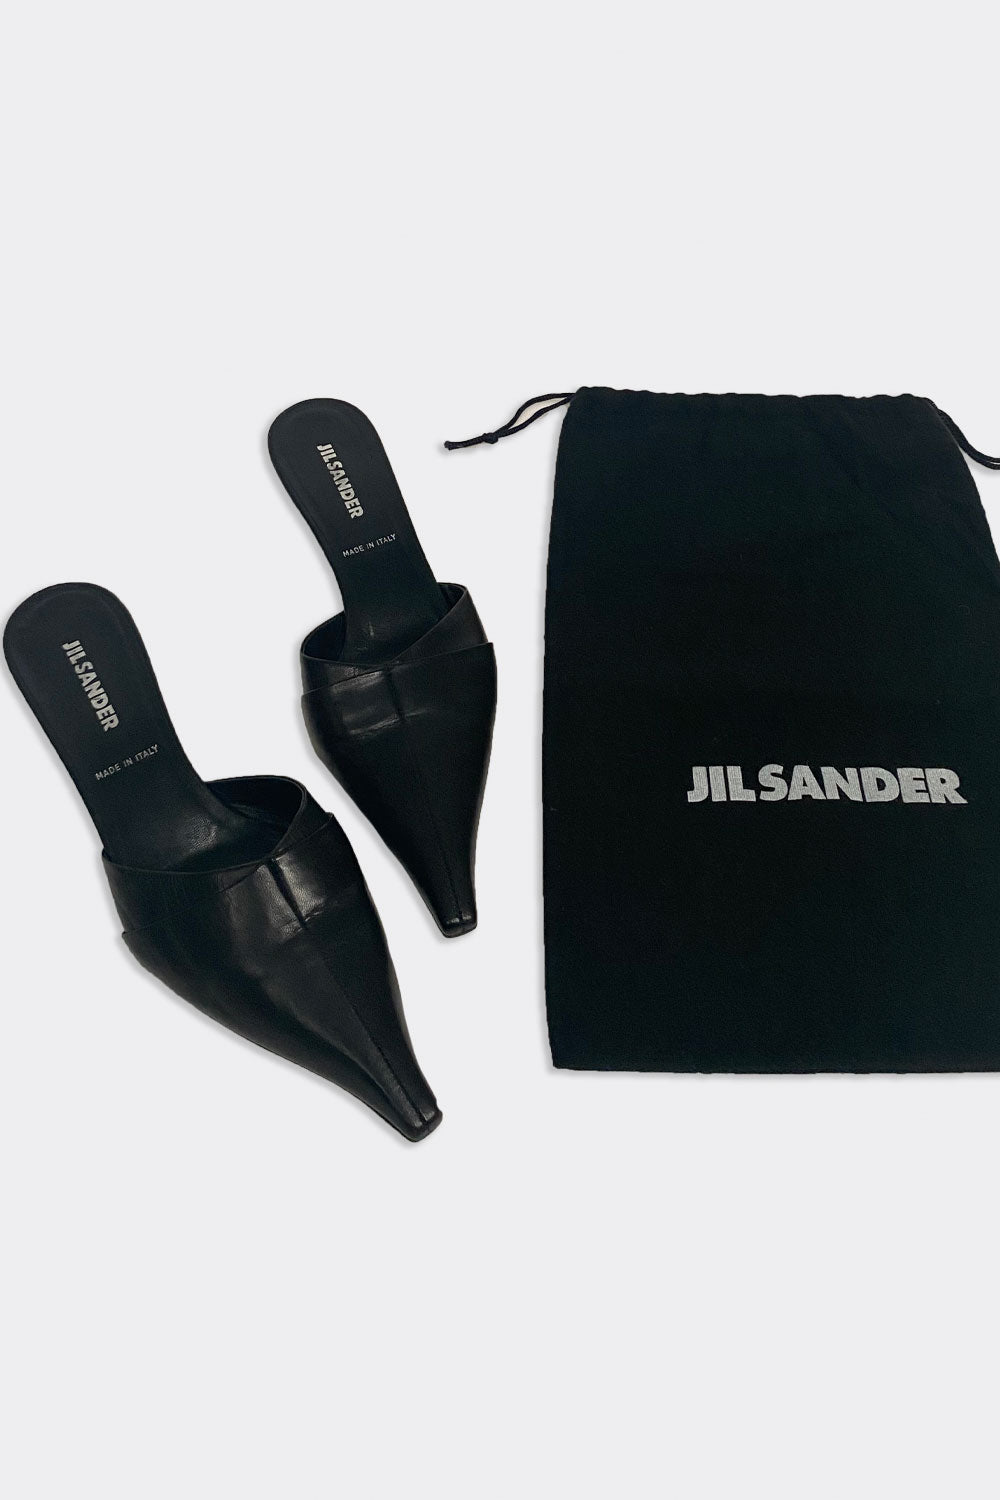 Jil Sander Leather Mules Size 37 (UK 4)